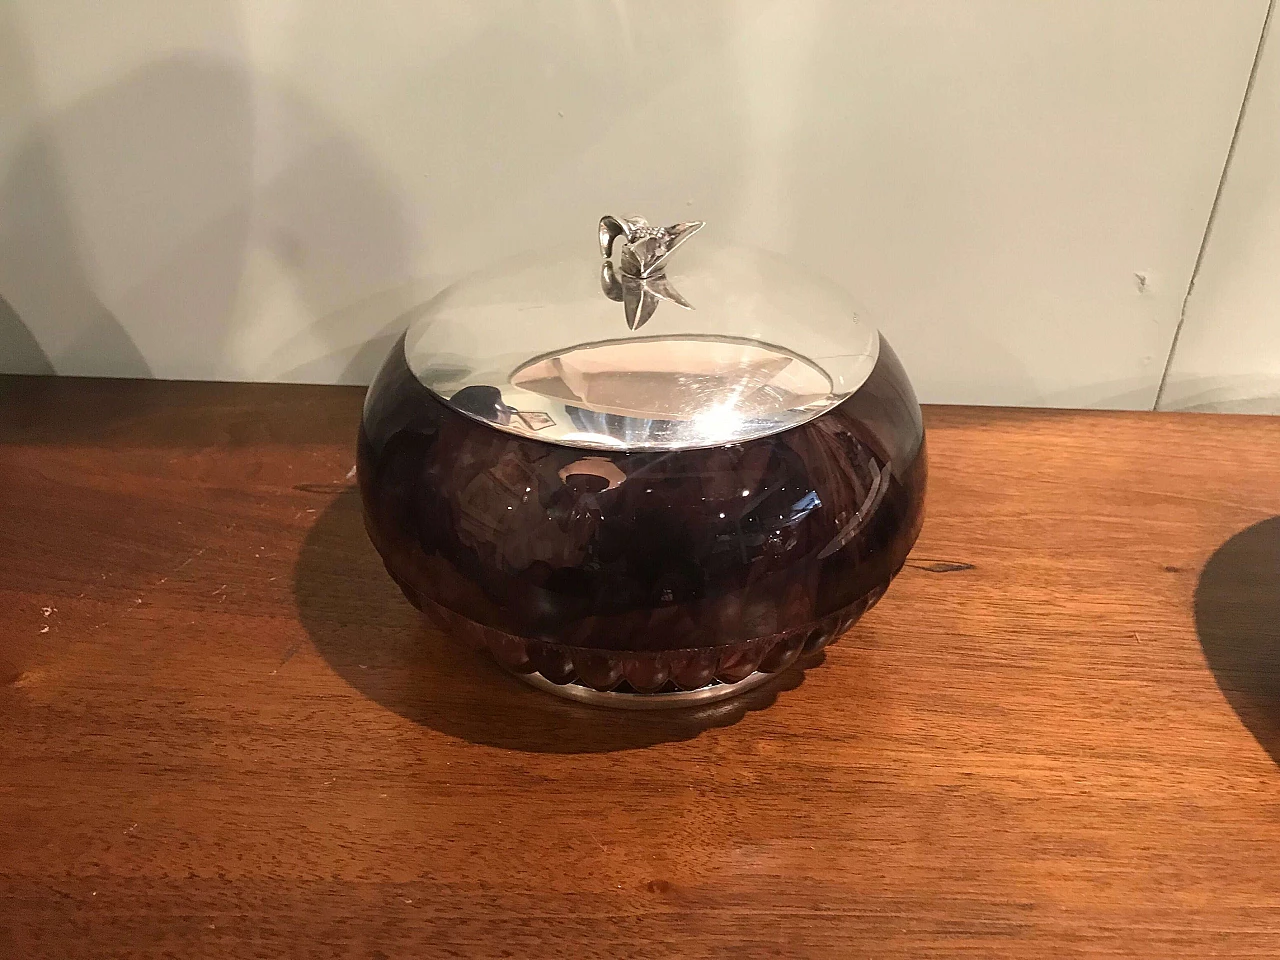 Bonbon bowl, from George Davidson's Cloud Glass series, 1920 1072642